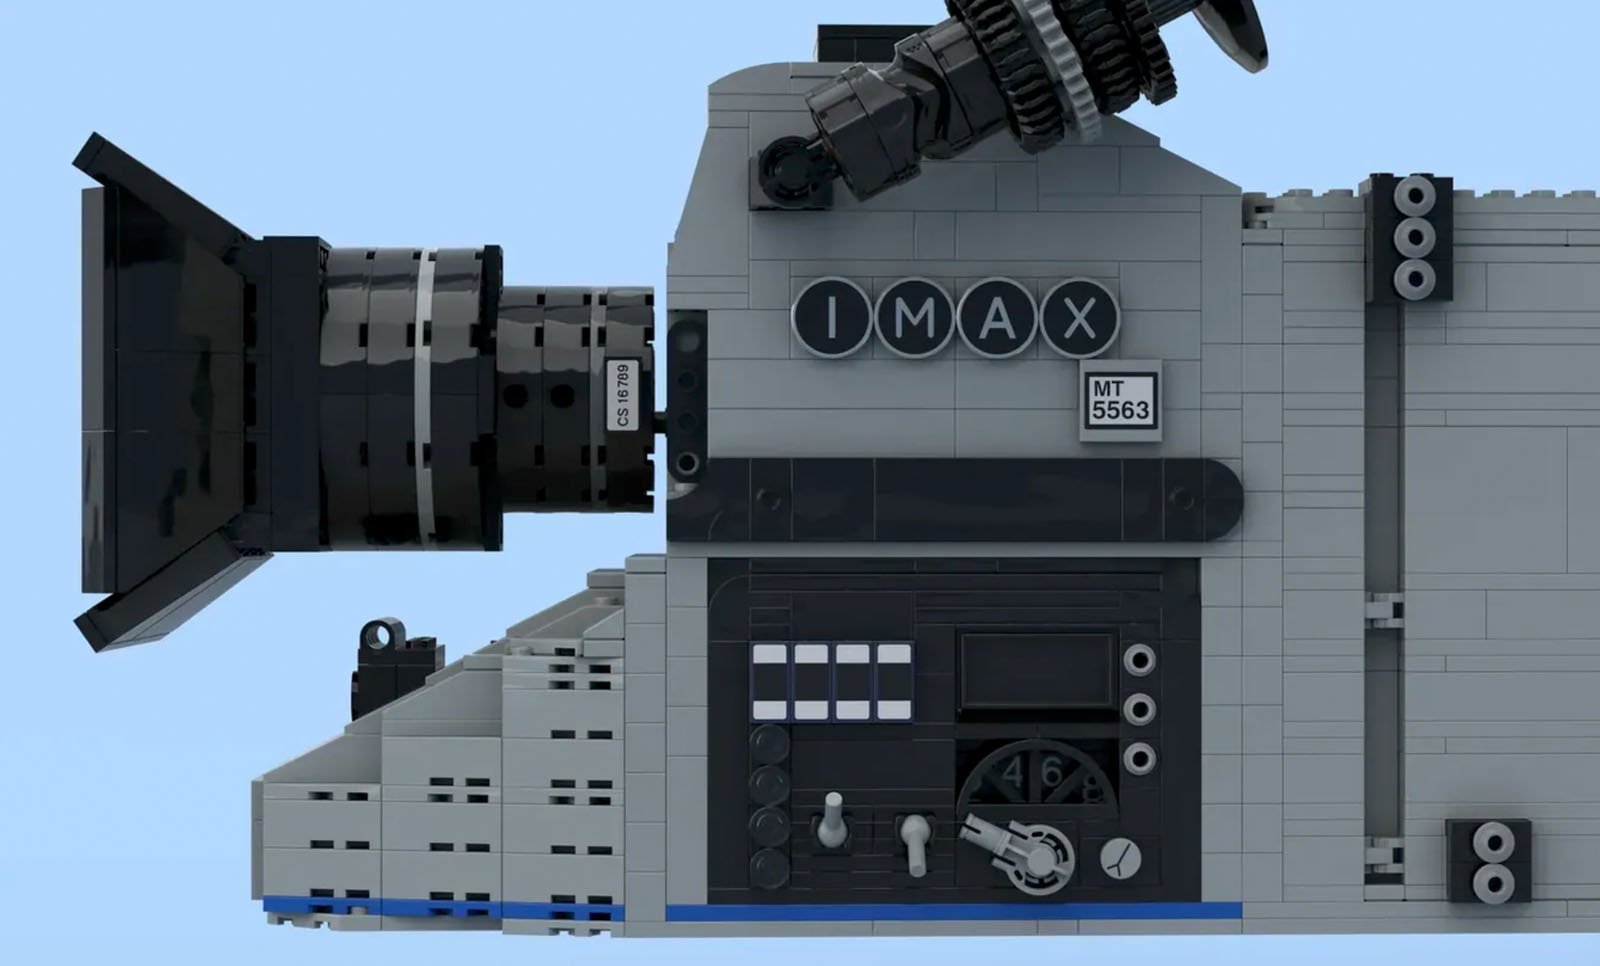 LEGO IMAX camera